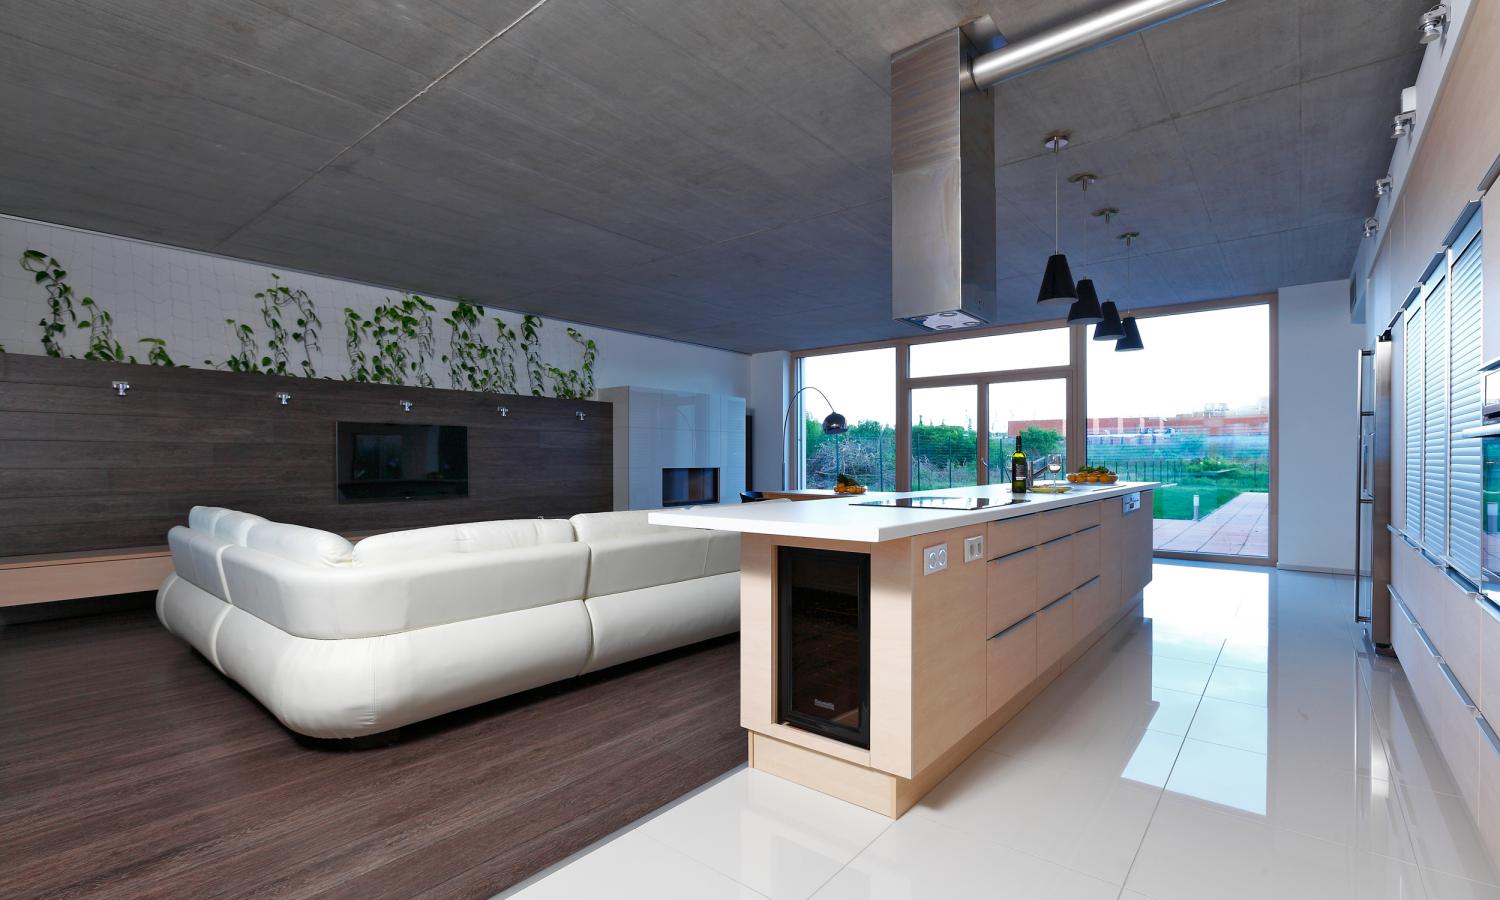 Open plan kitchen living room design ideas